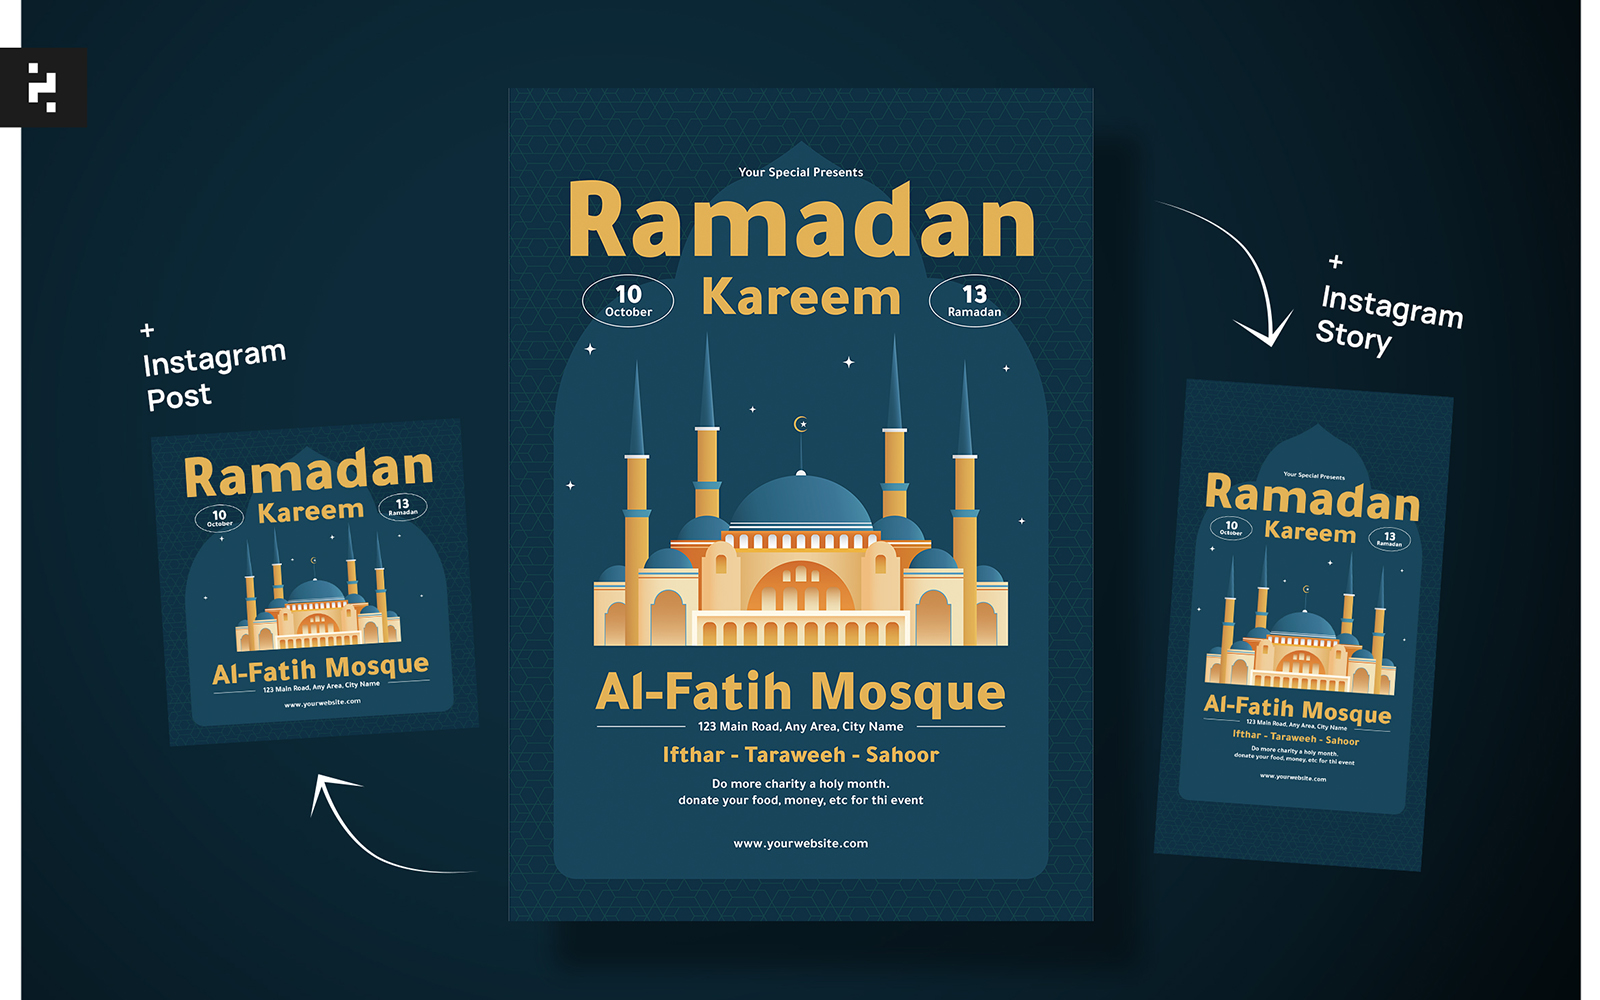 Ramadan Kareem Flyer Templates